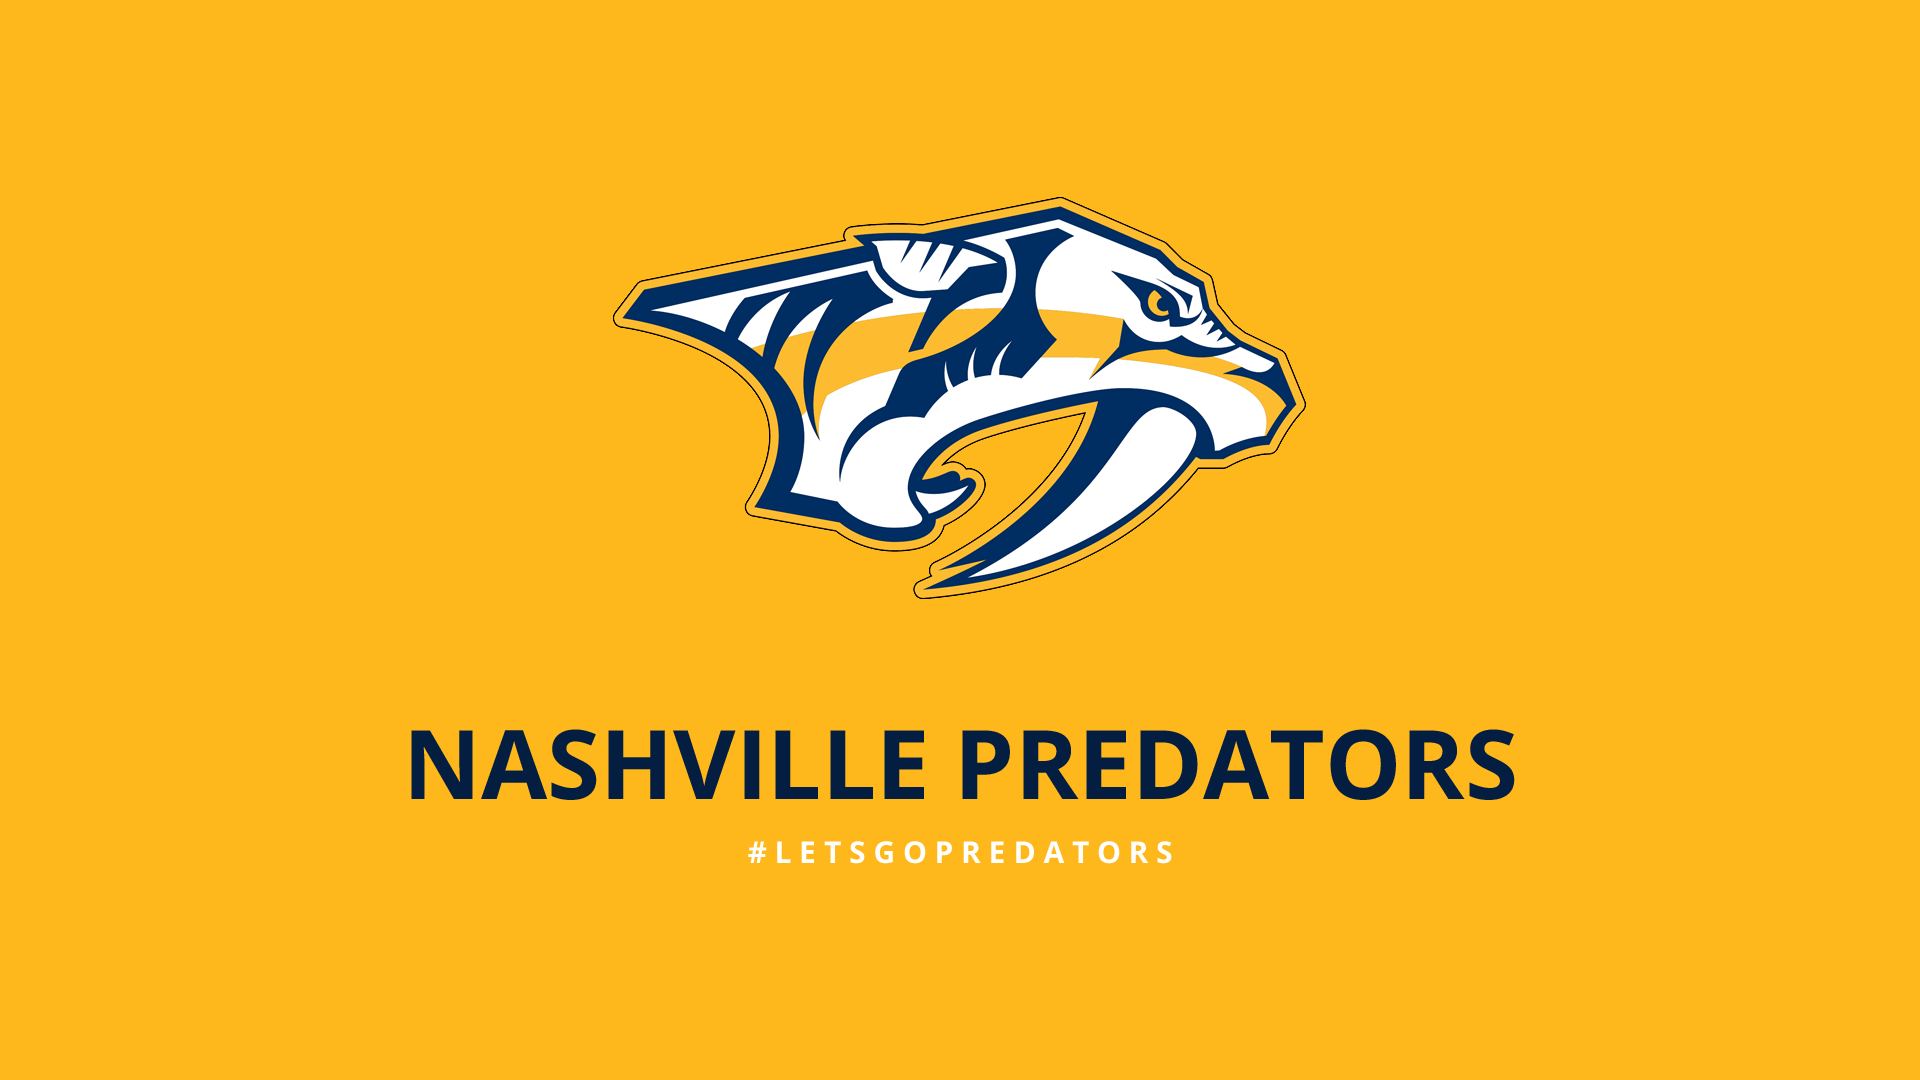 Minimalist Nashville Predators wallpaper